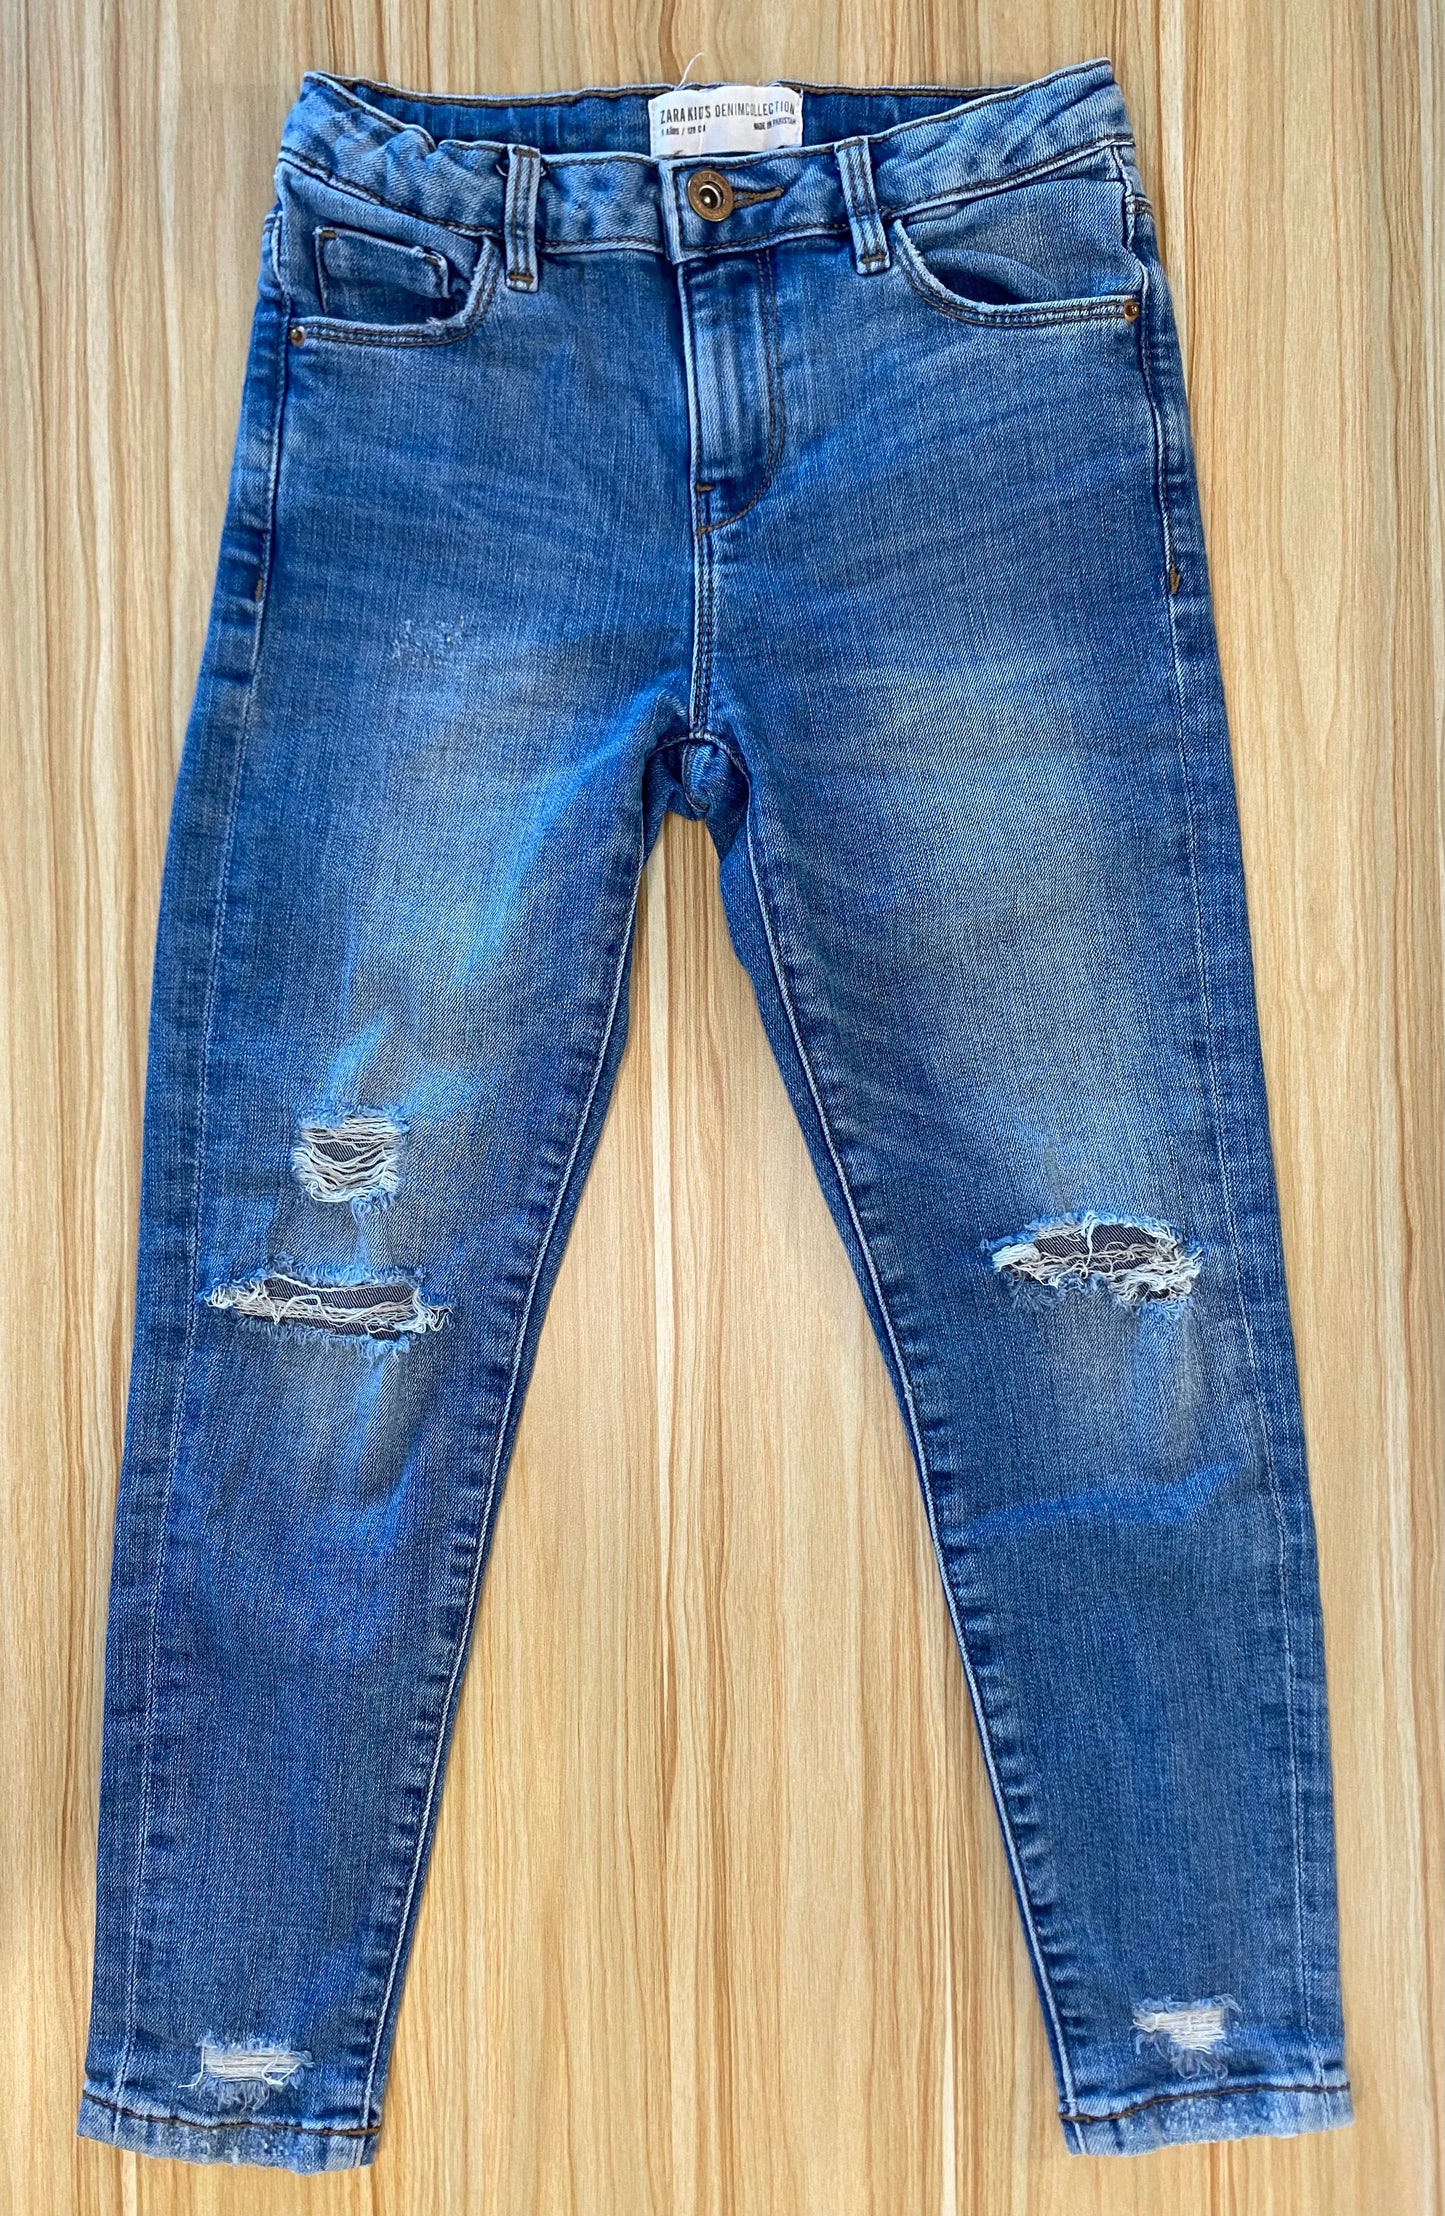 ZARA Distressed Jeans / 8Y